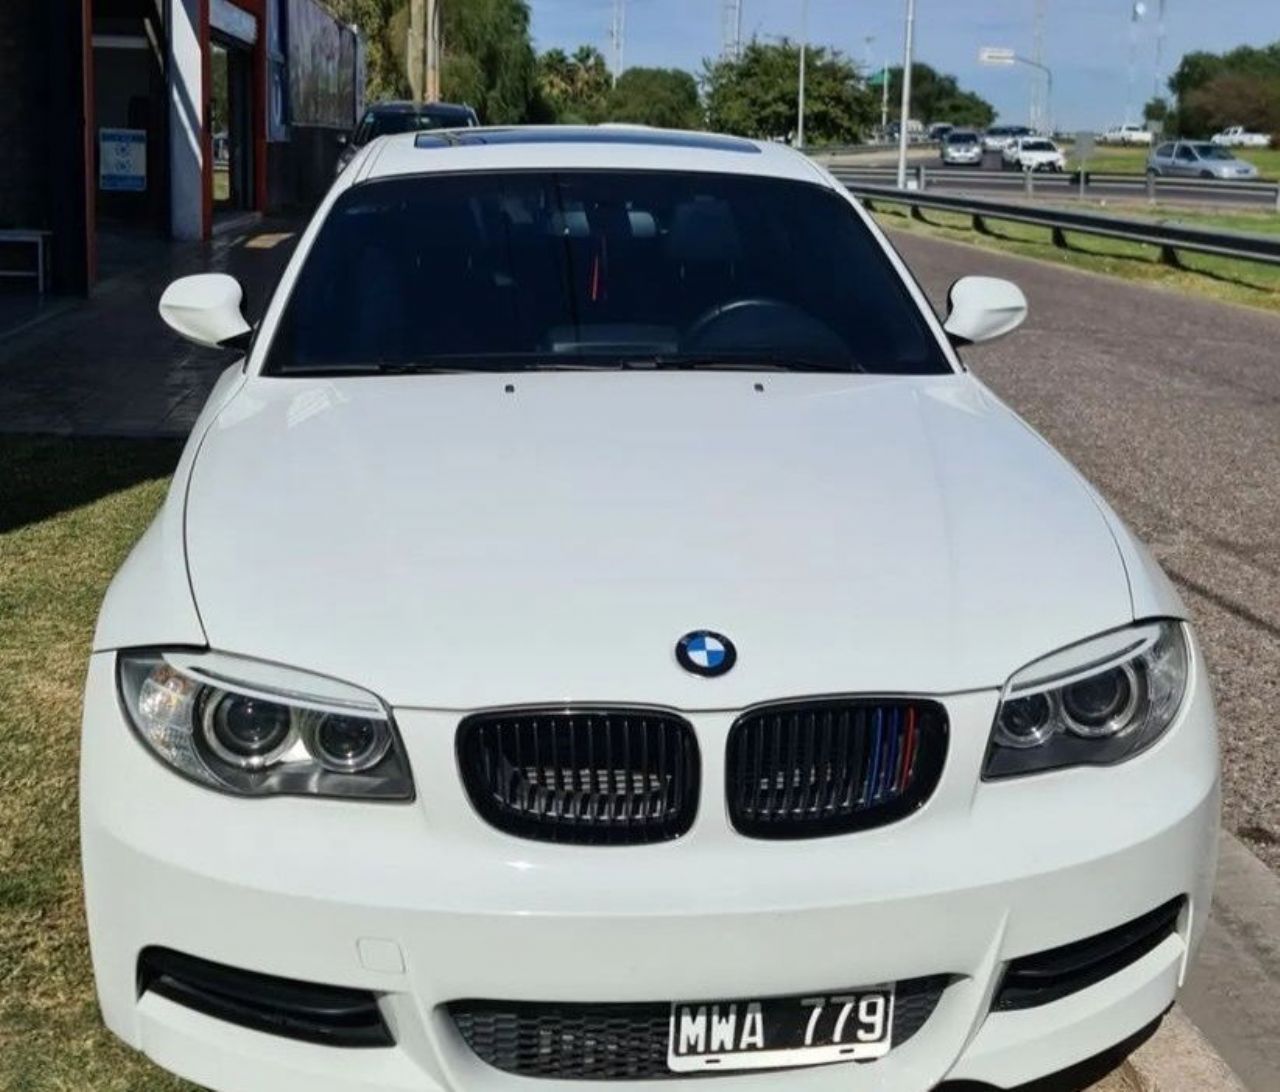 BMW Serie 1 Usado en San Juan, deRuedas